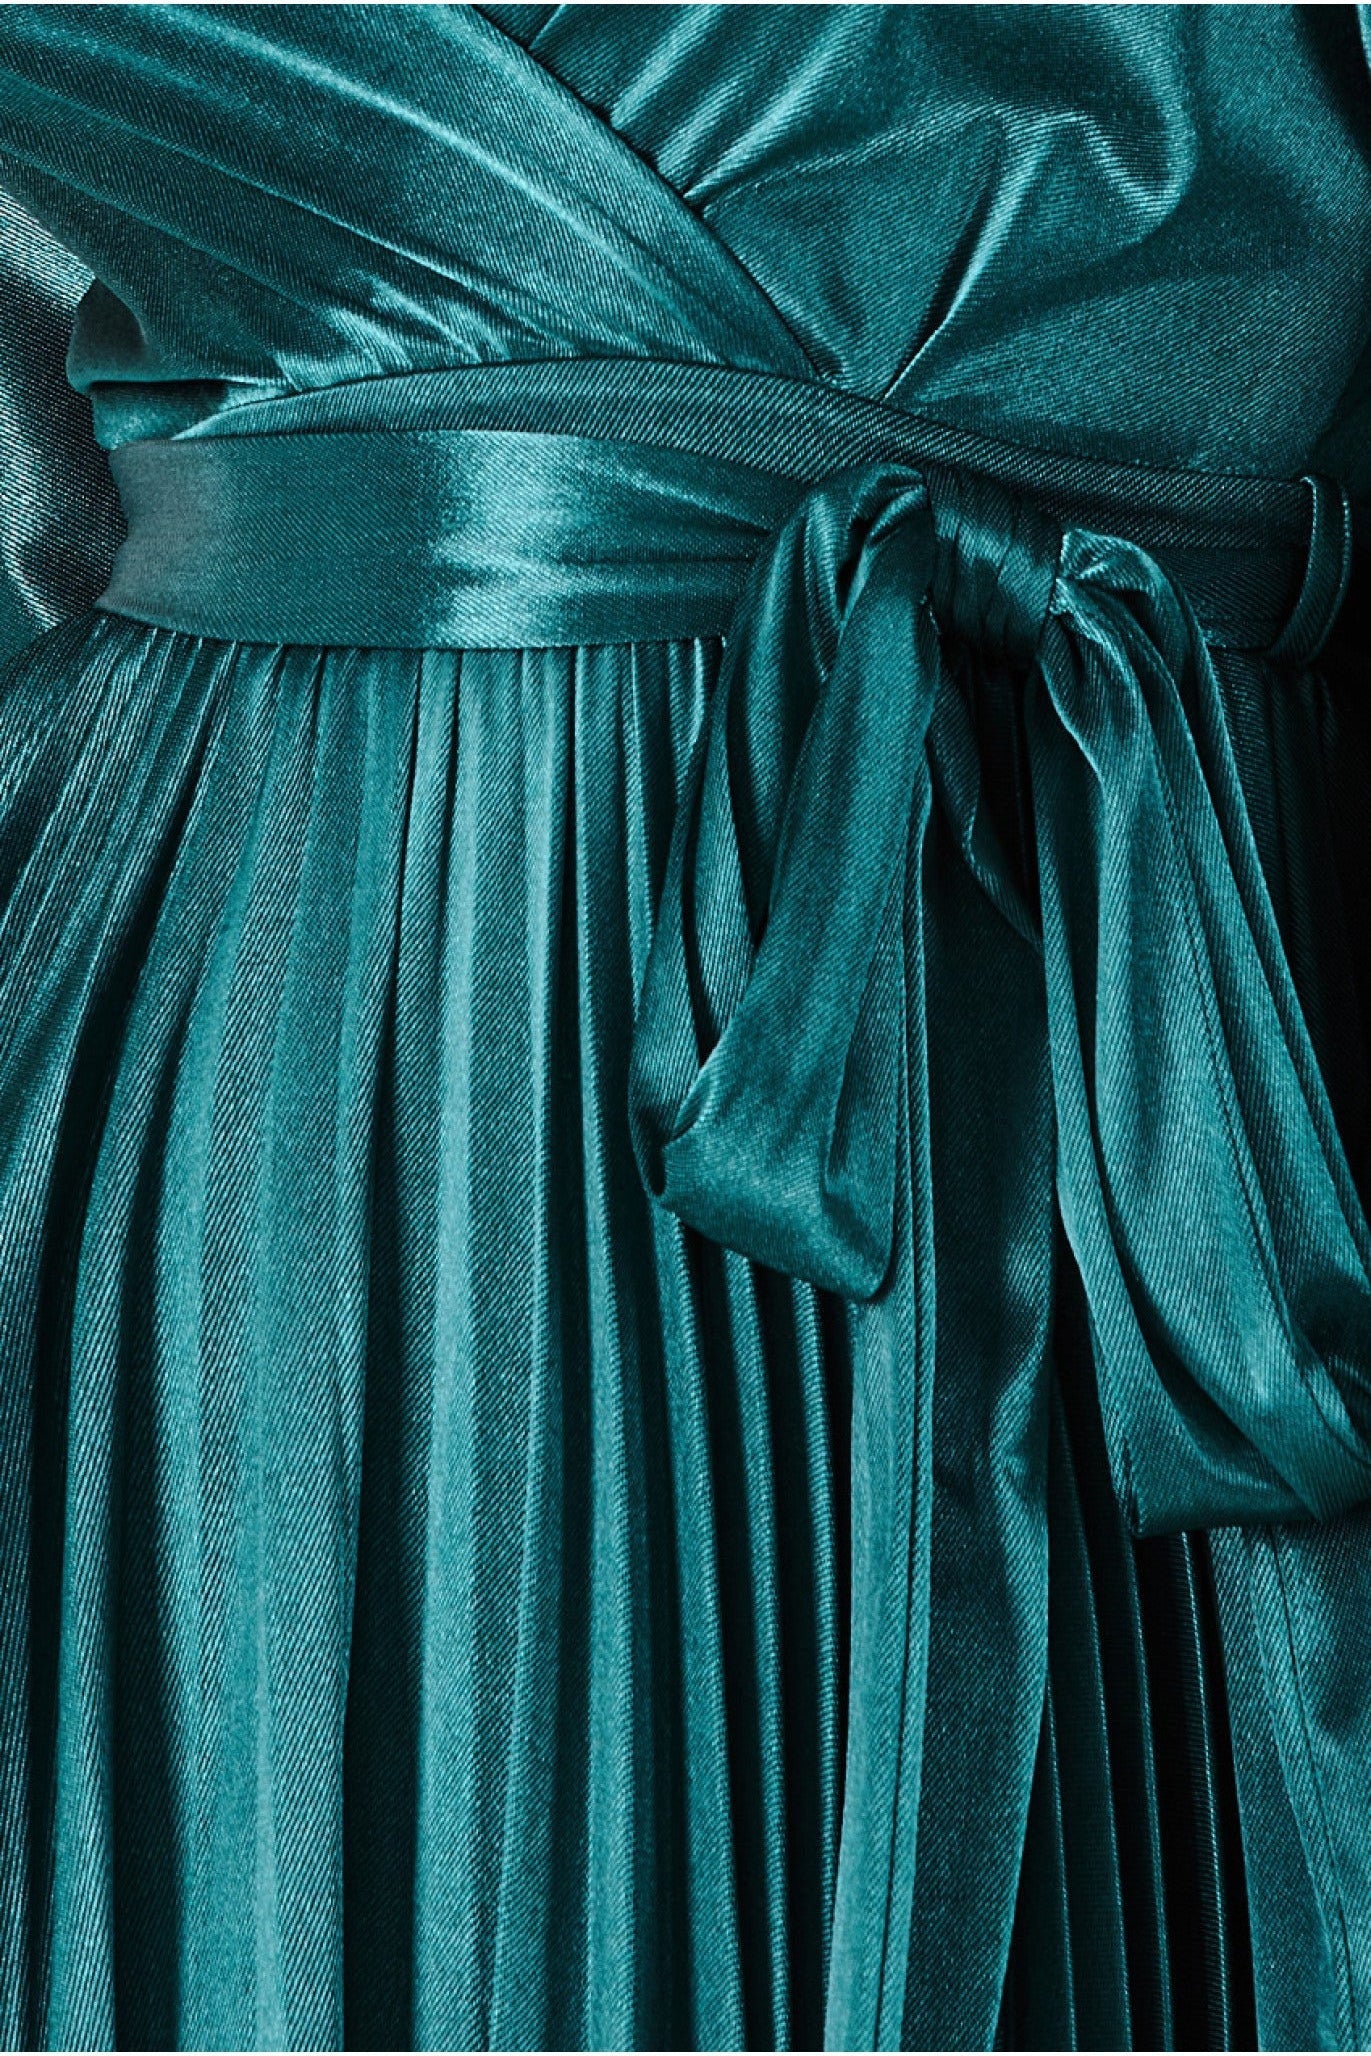 Satin Pleated Skirt Wrap Midi Dress - Emerald Green DR3921